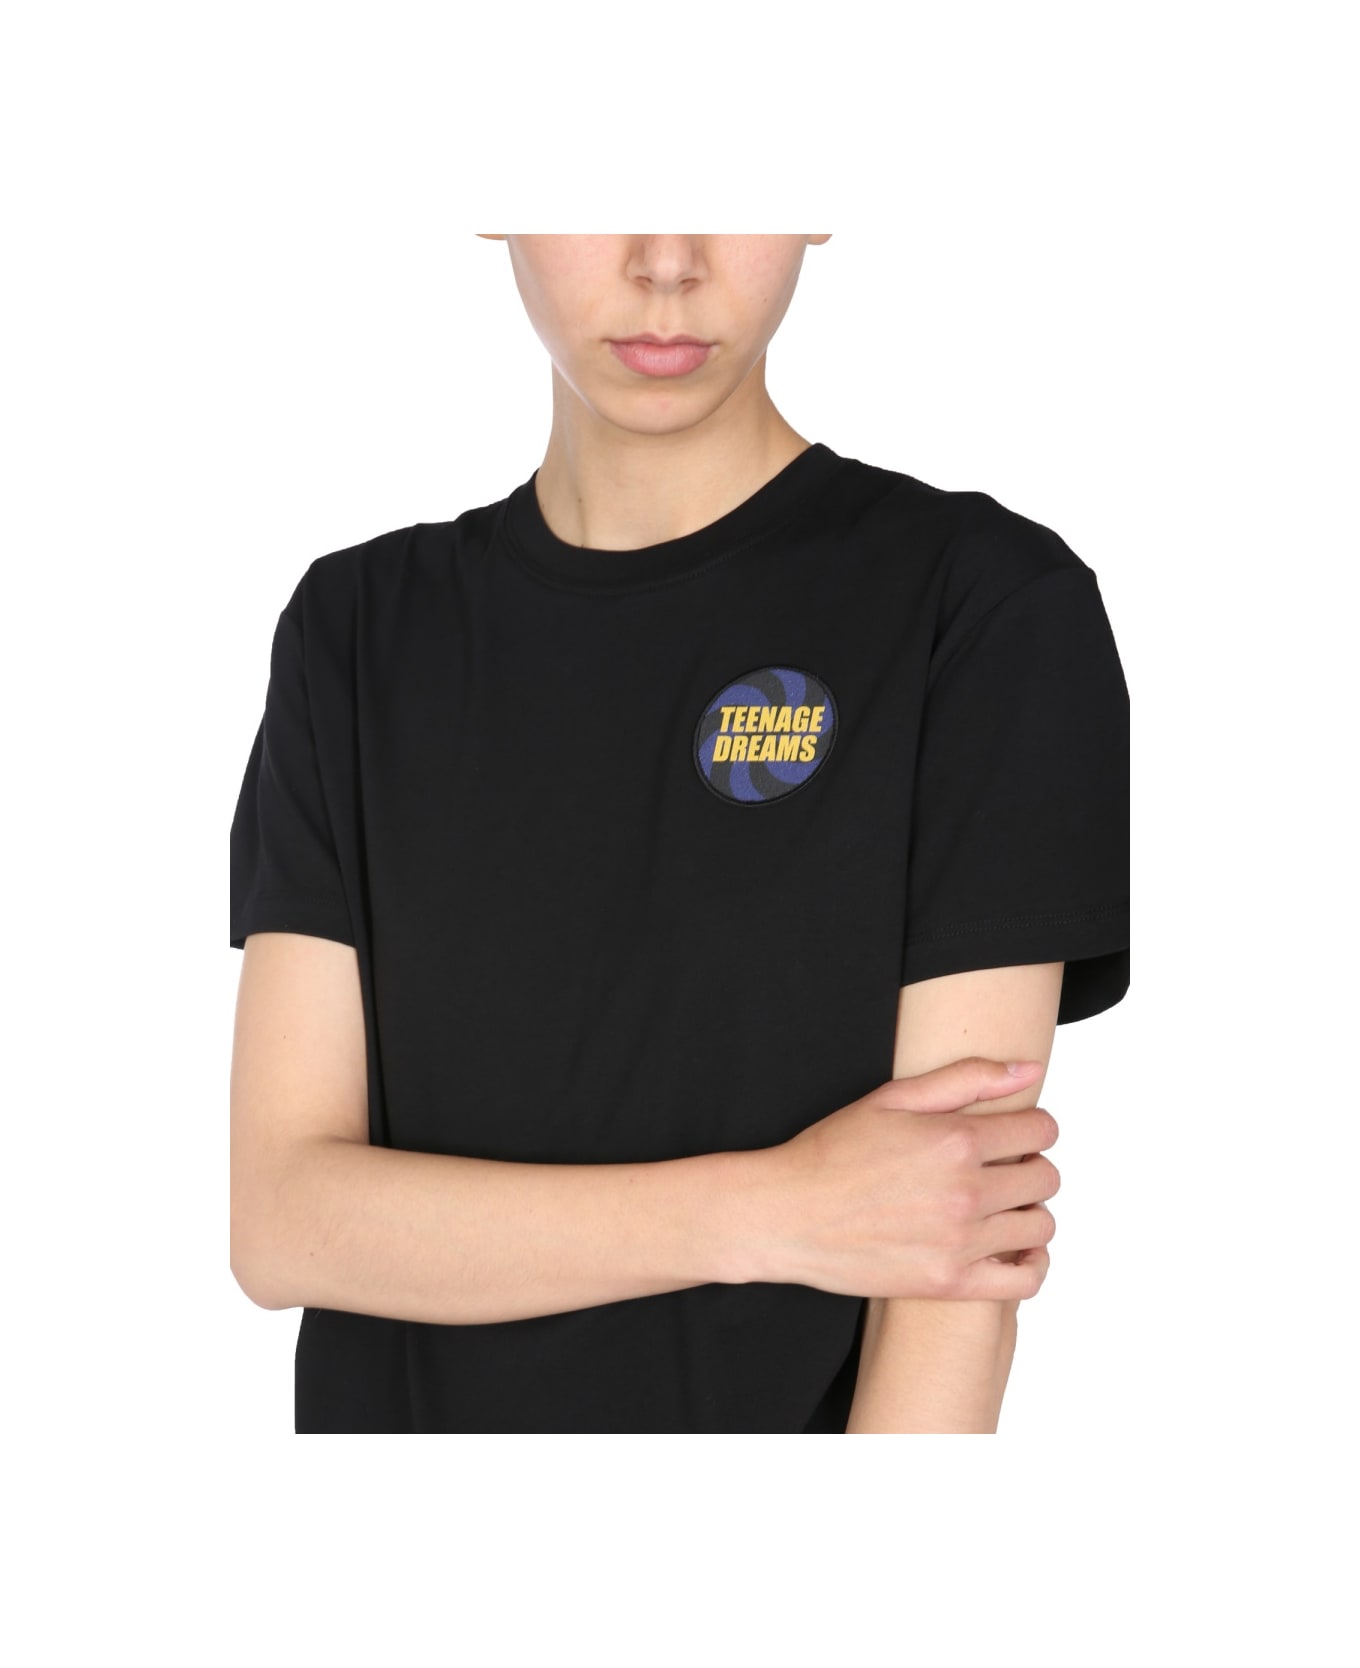 Raf Simons Crew Neck T-shirt - BLACK Tシャツ